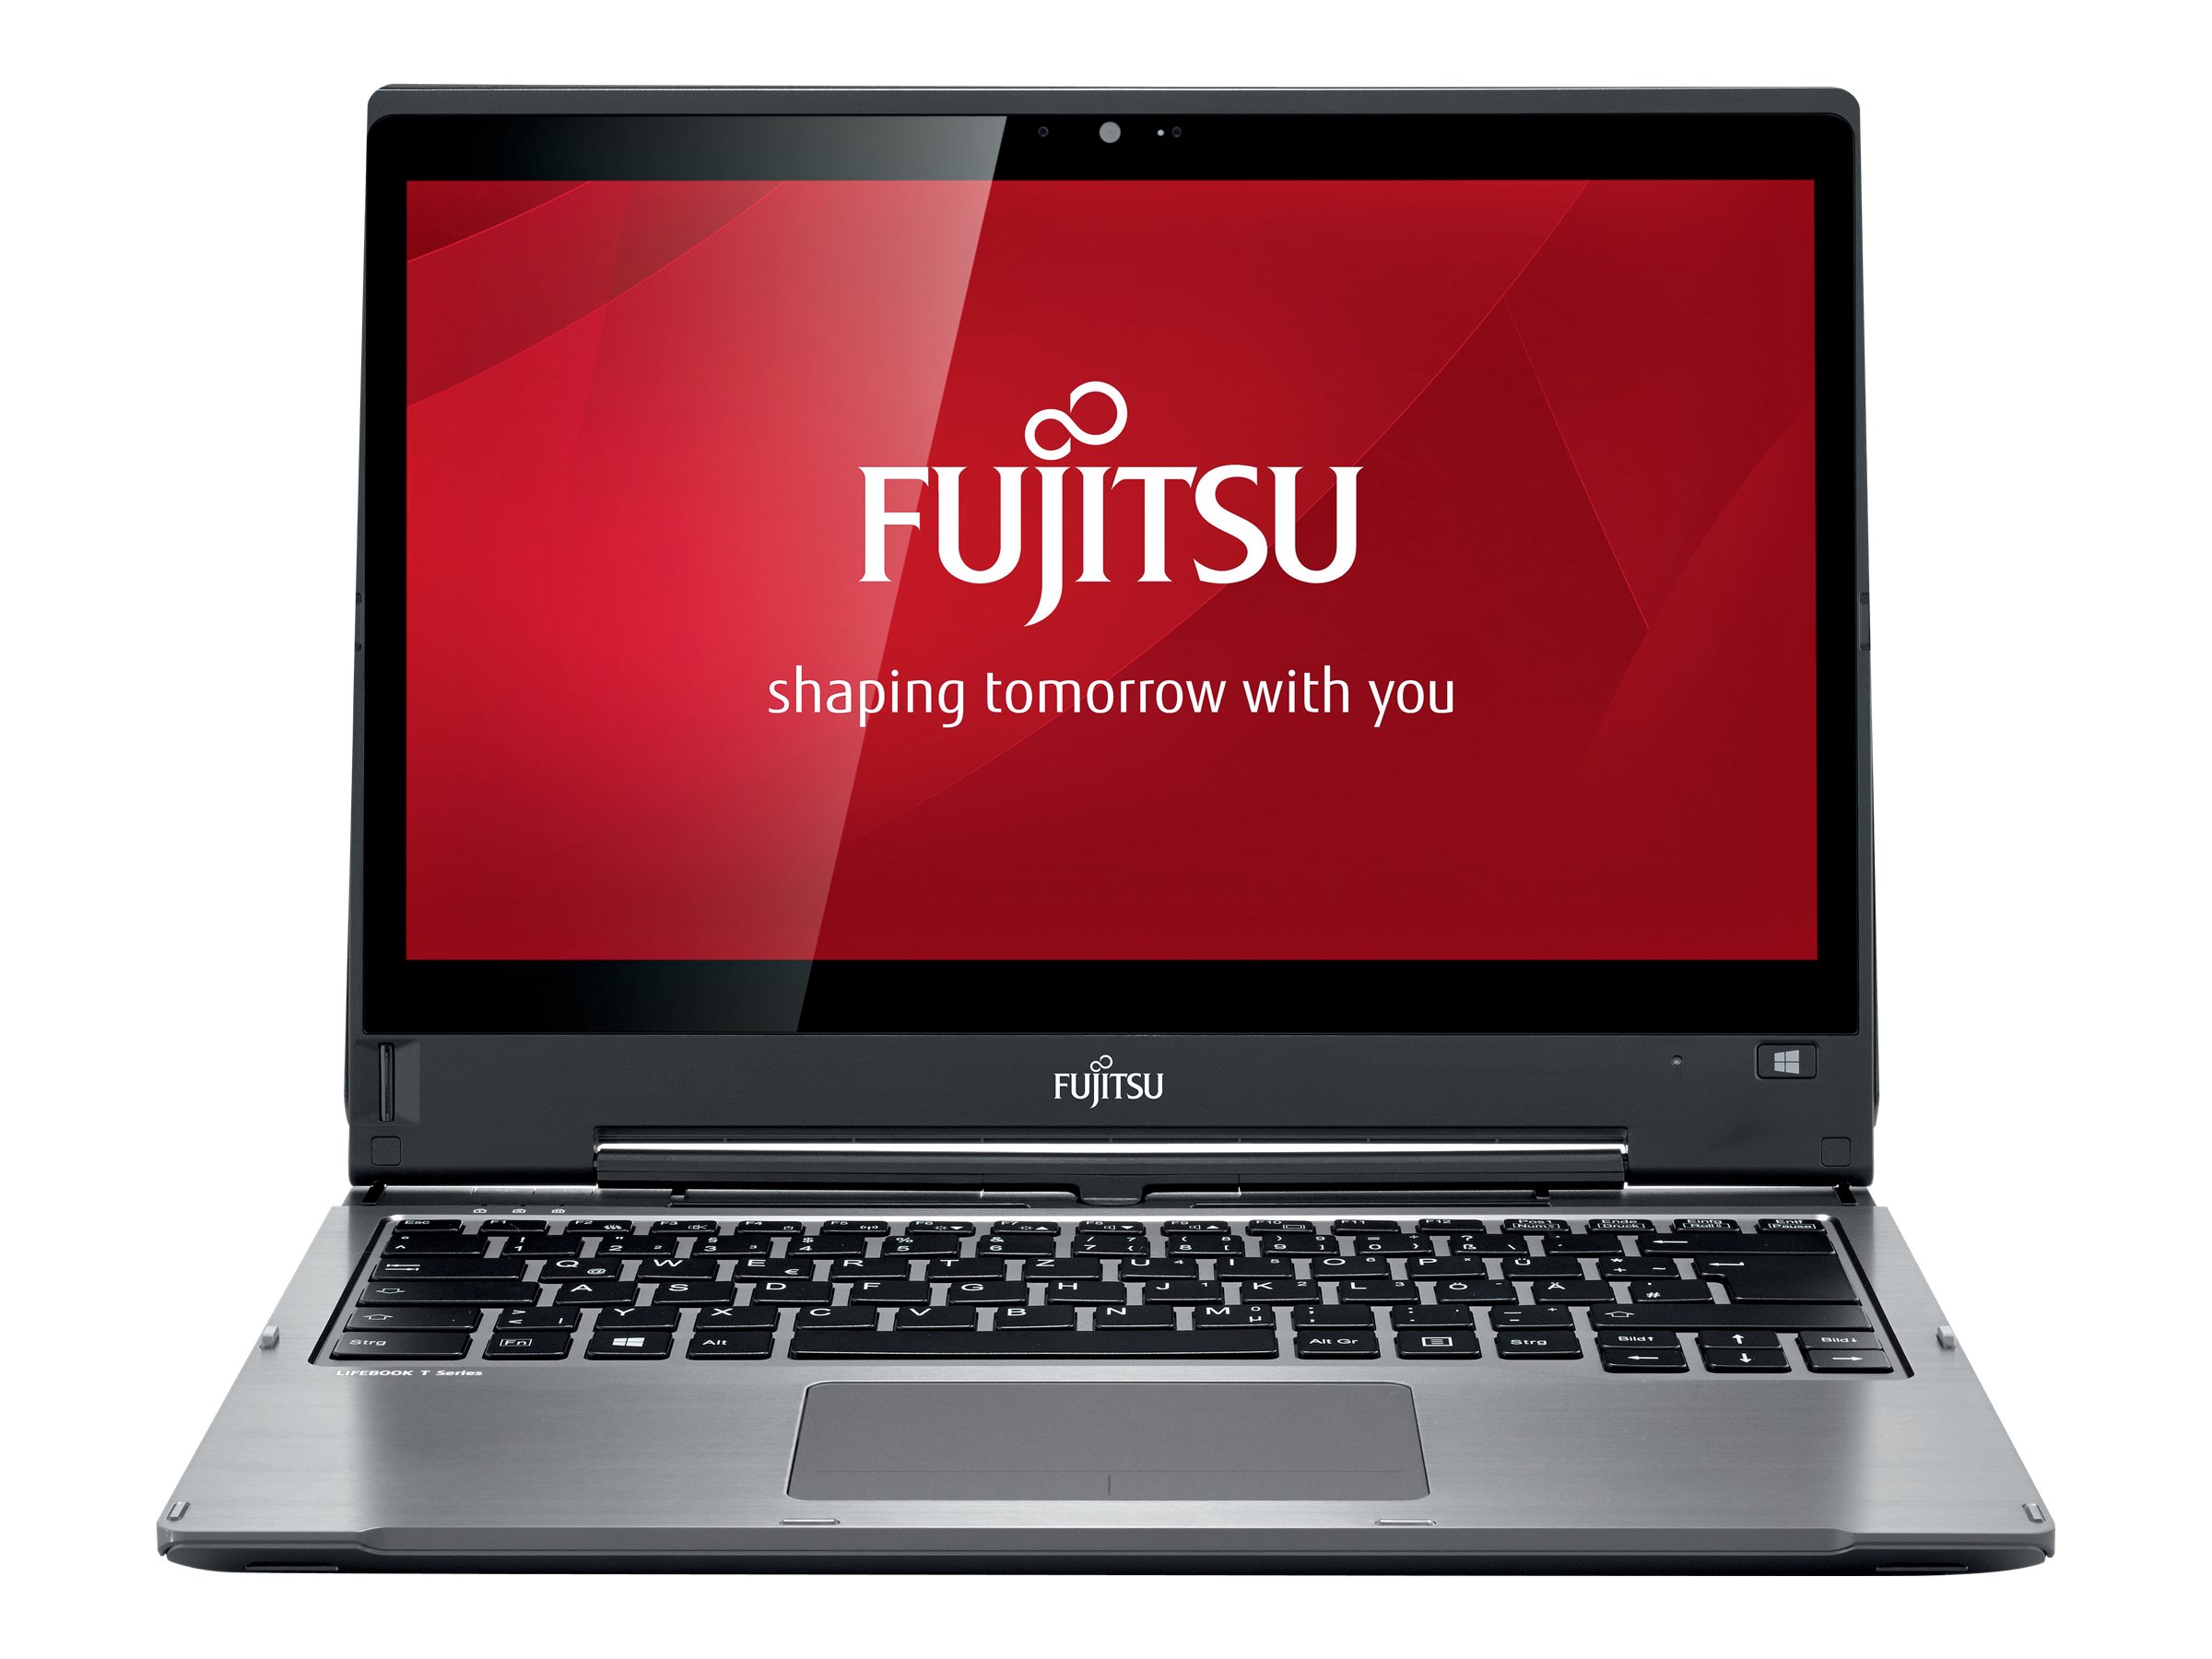 Fujitsu LIFEBOOK T936 | www.shi.com